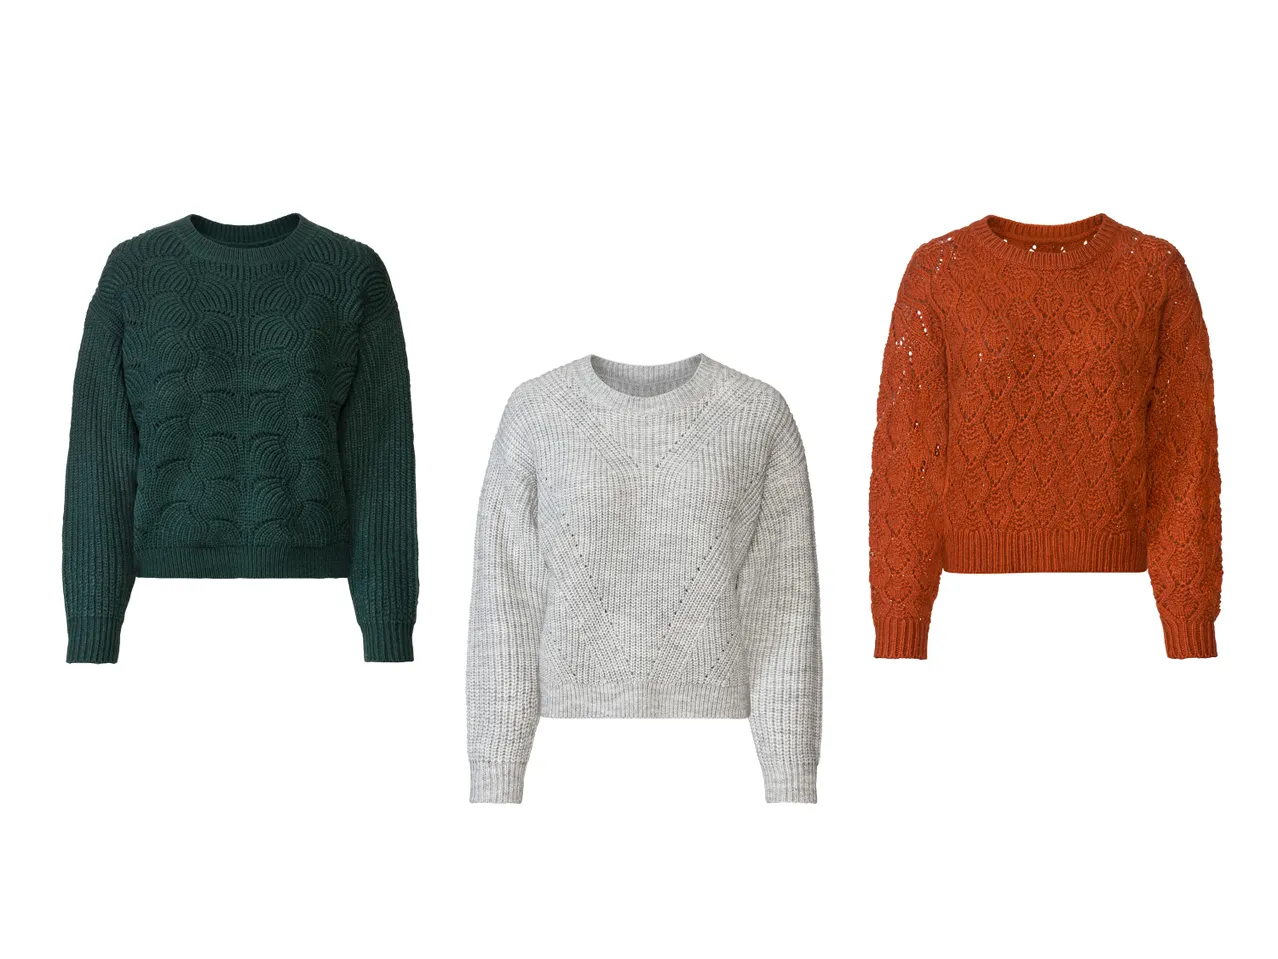 esmara® Sweter damski , cena 29,5 PLN 
esmara® Sweter damski 3 wzory 
- rozmiary: ...